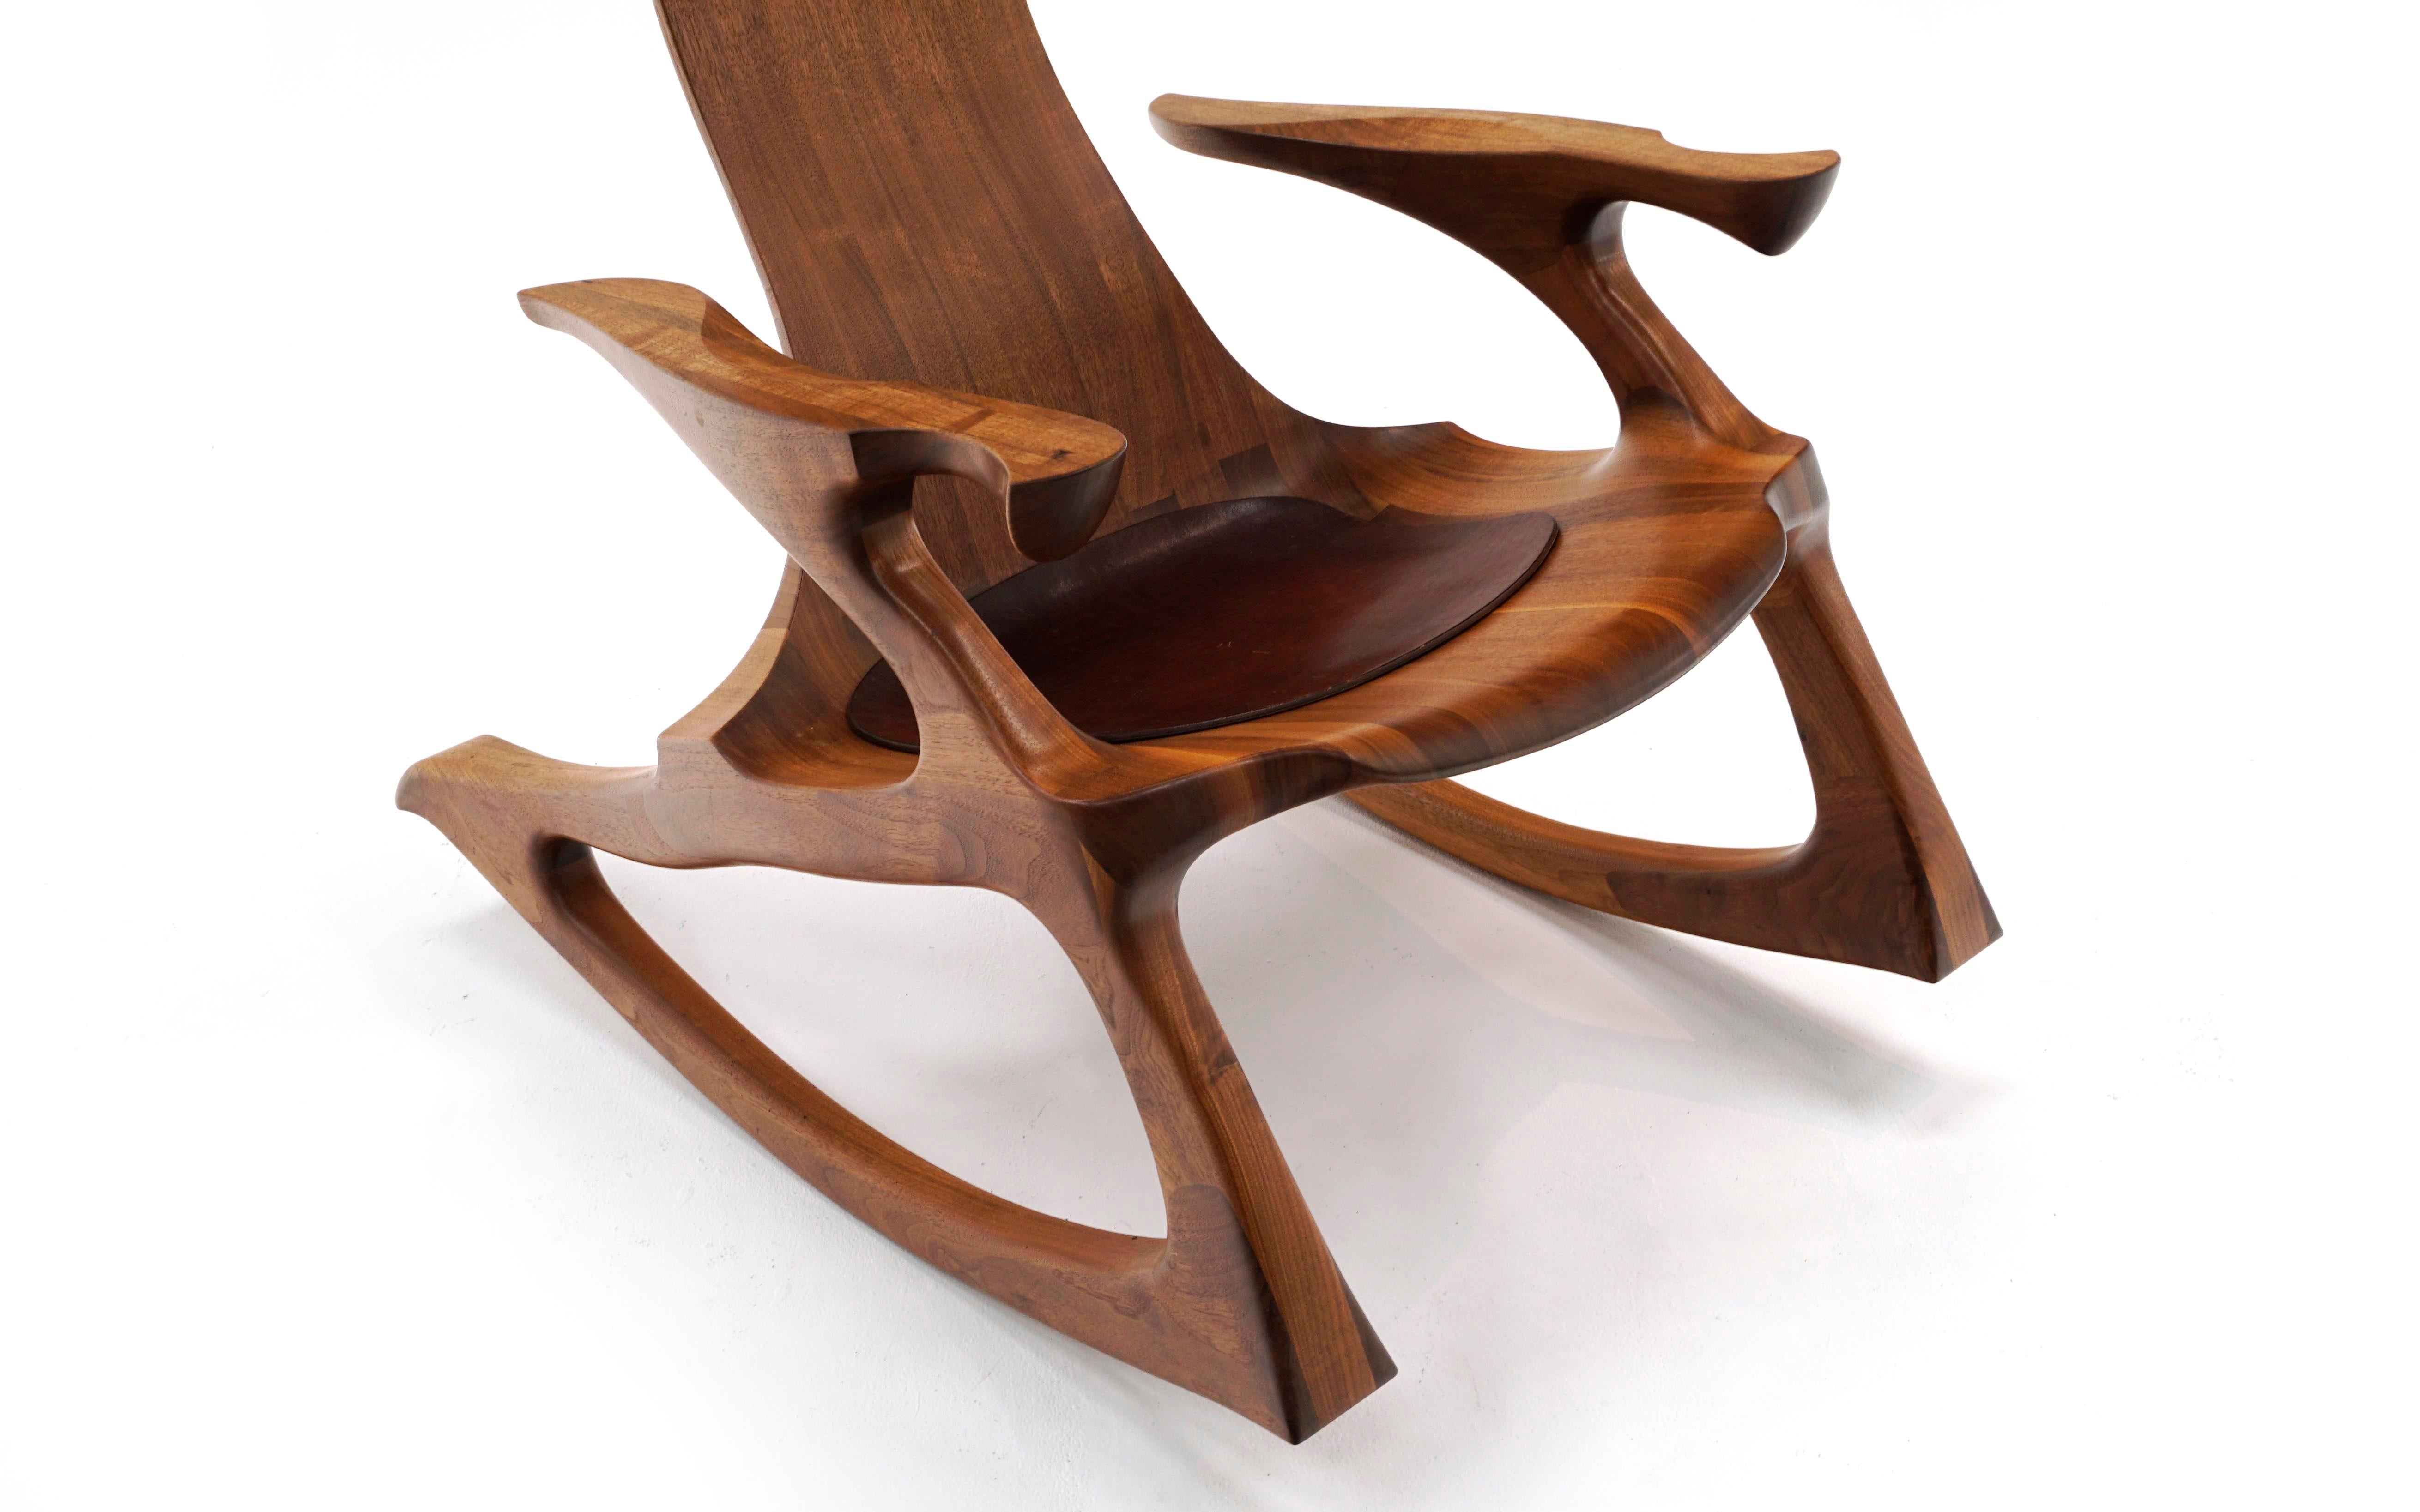 American Studio Craft Sculptural Walnut Rocking Chair, Hand Crafted, Marked 2